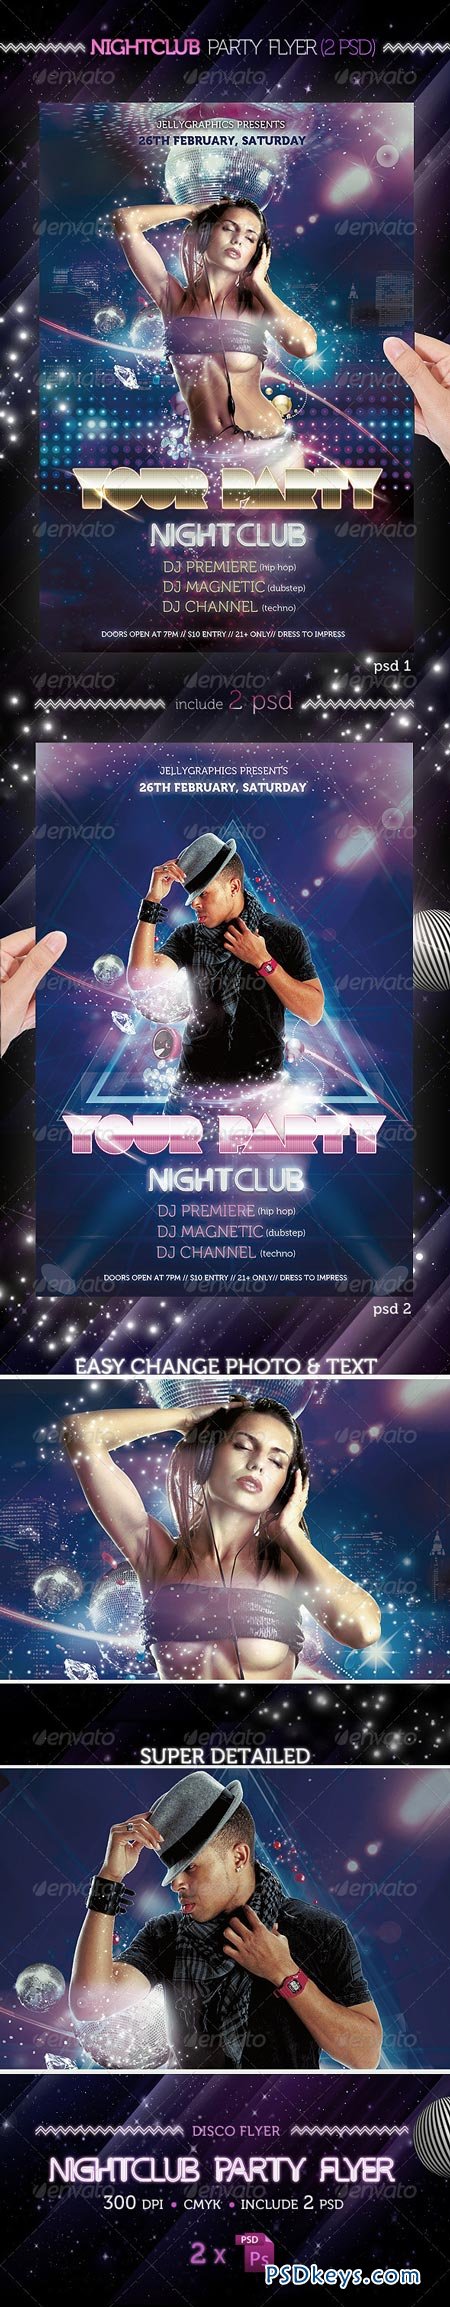 Nightclub Party Flyer Template 1665712